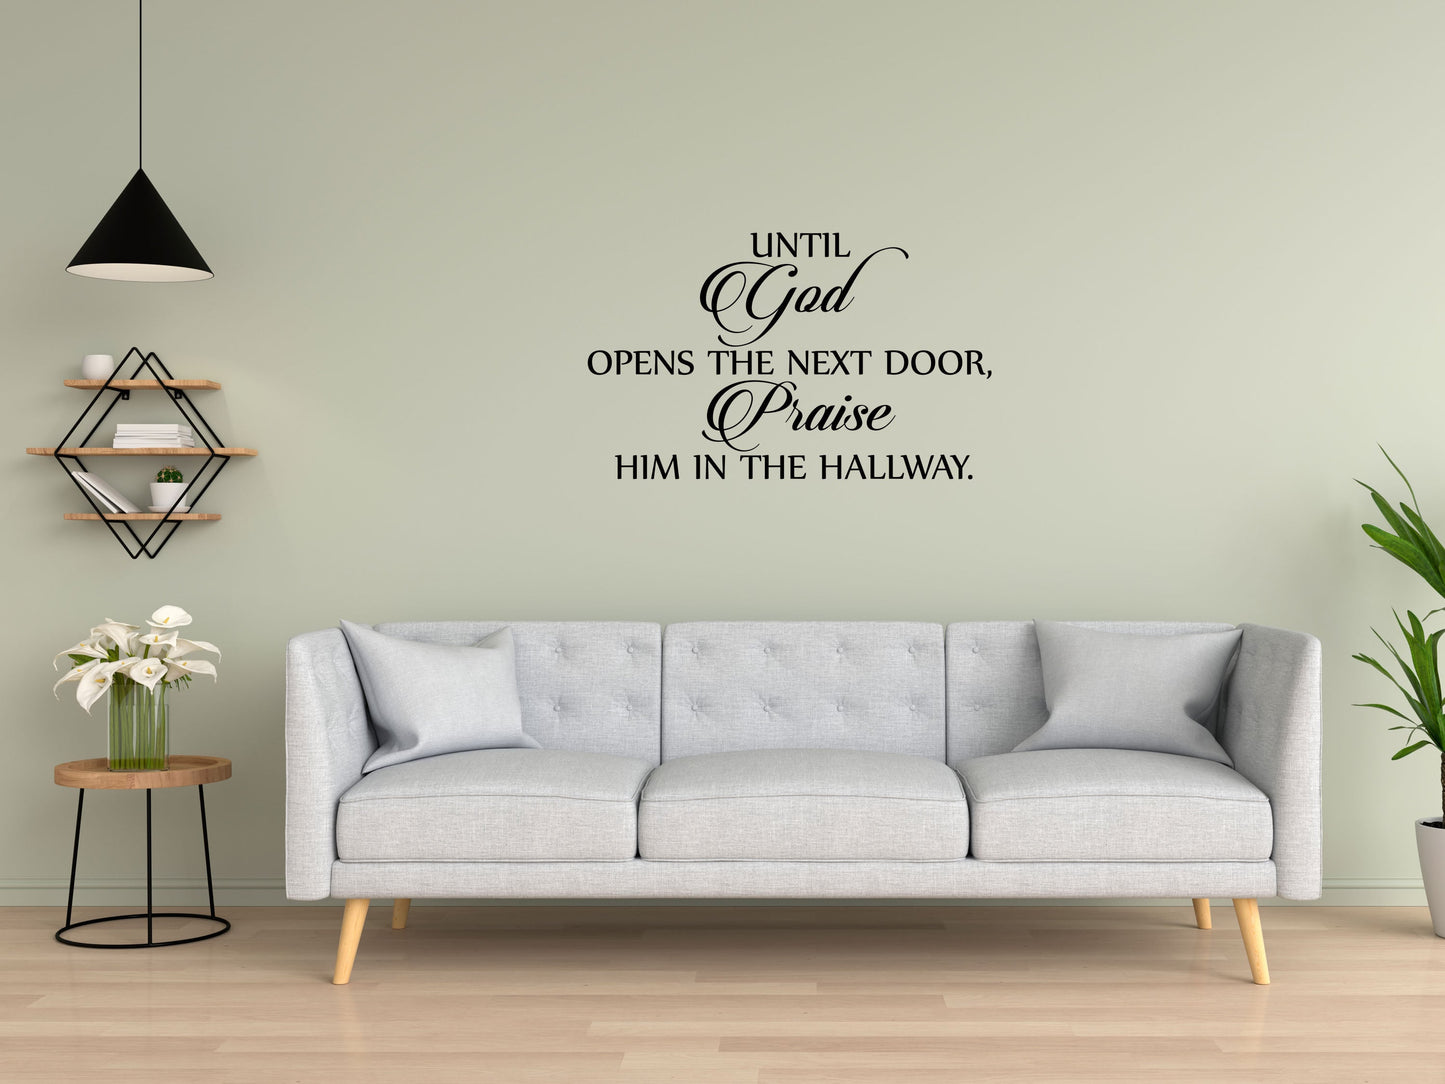 Until God Opens The Next Door, Praise Him In The Hallway - Inspirational Wall Decals Vinyl Wall Decal Inspirational Wall Signs 